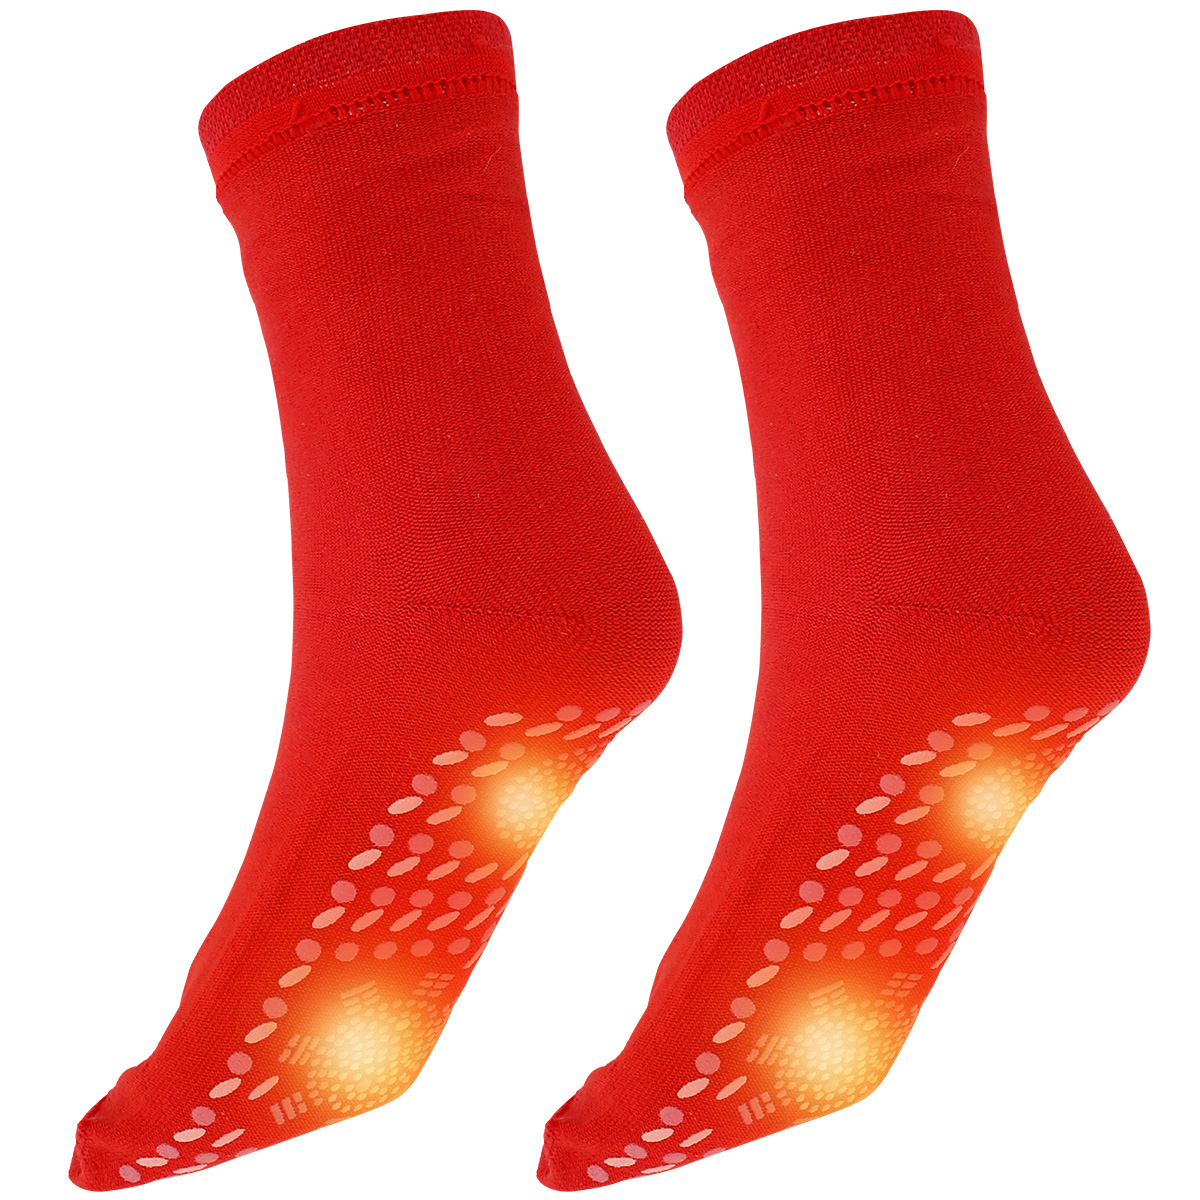 Self-Heating Socks Anti-Fatigue Winter Outdoor Warm Heat Insulated Socks Thermal Socks for Hiking Camping Cycling Skiing